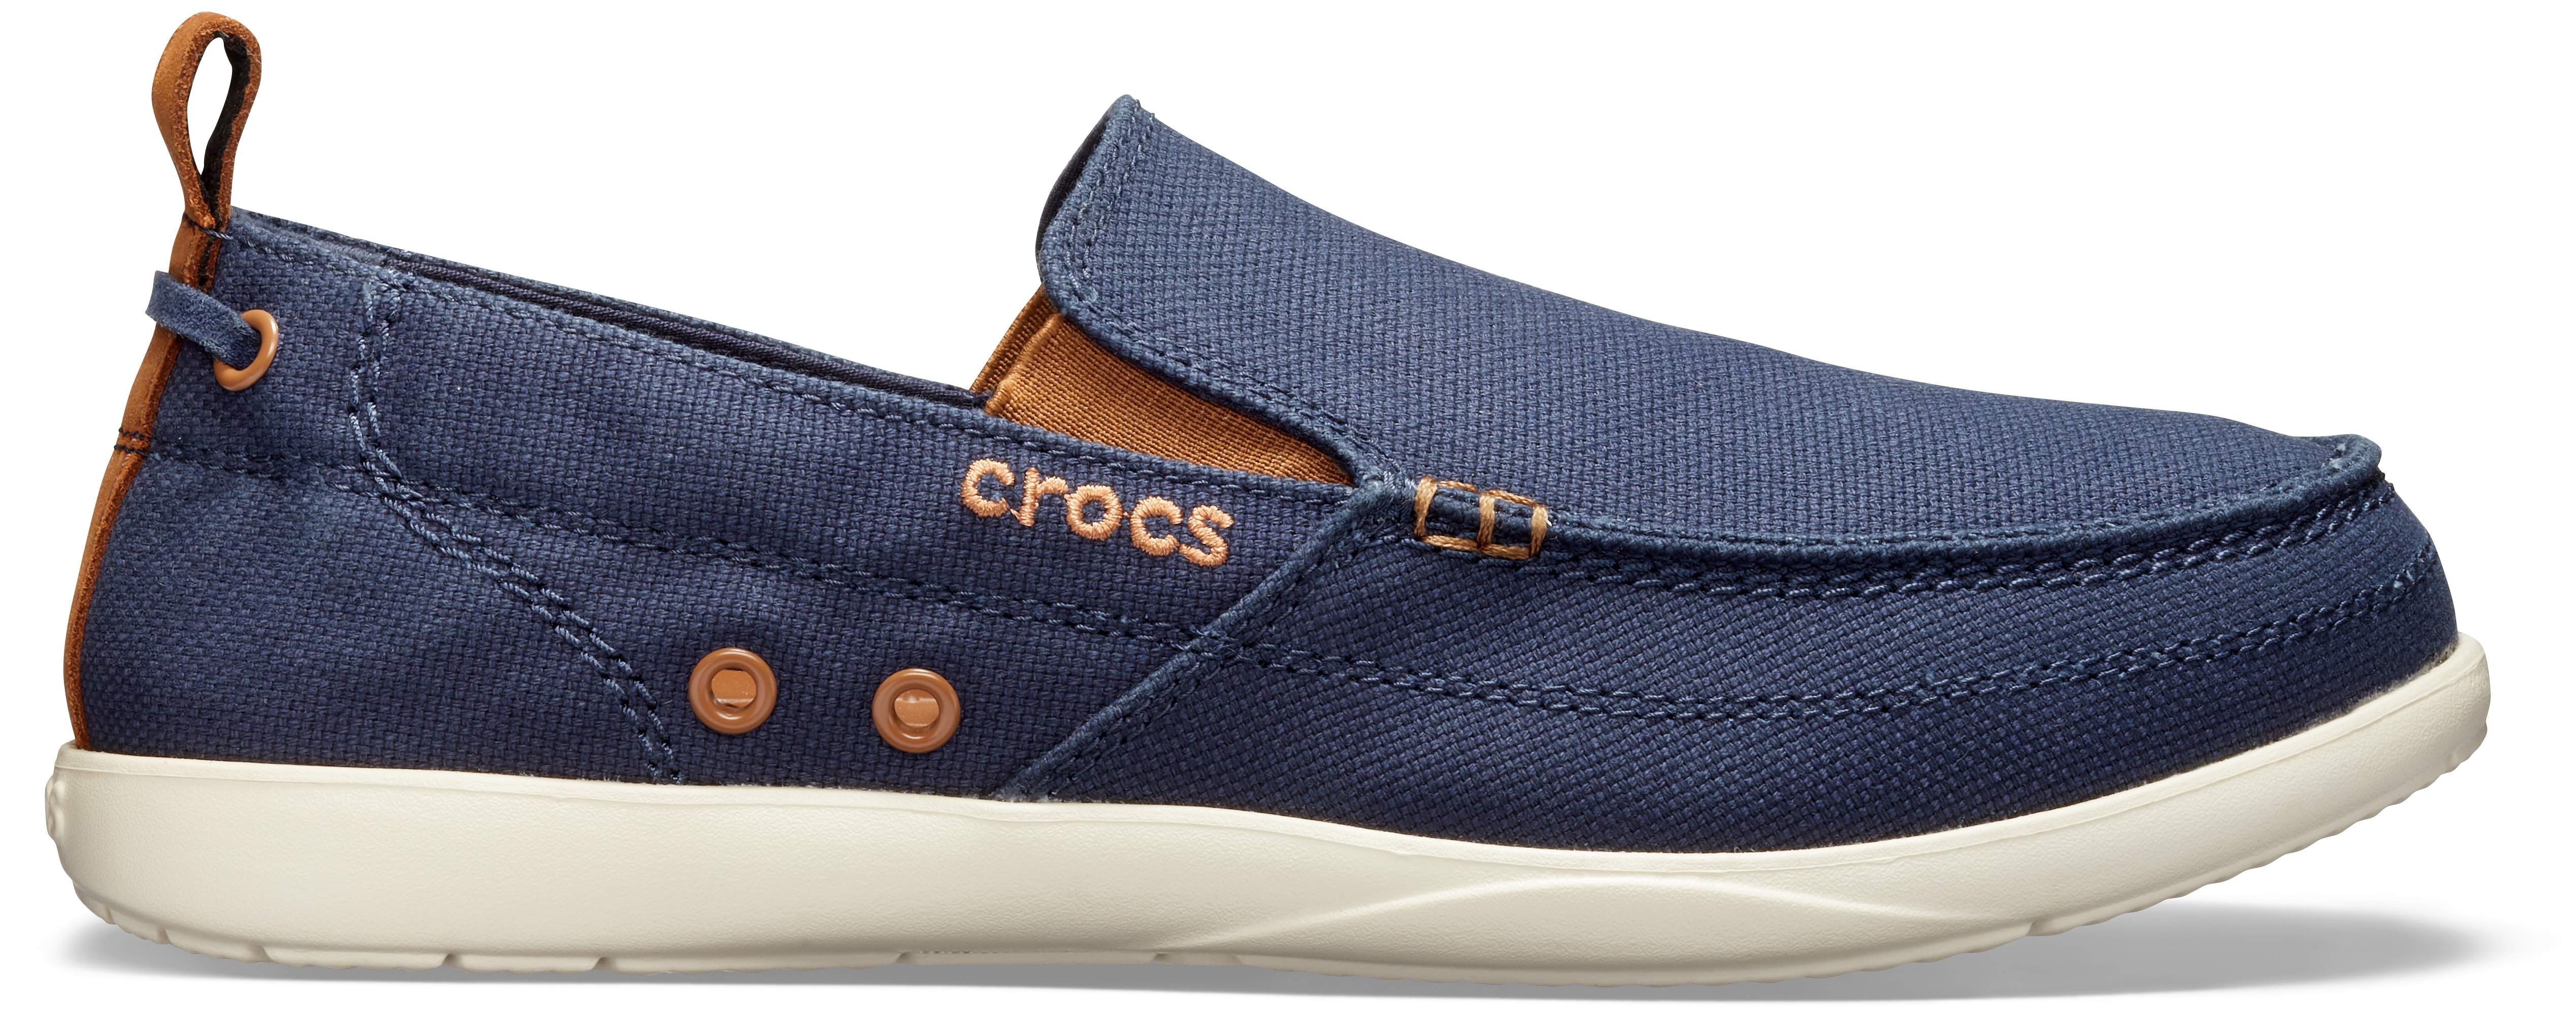 crocs 11270